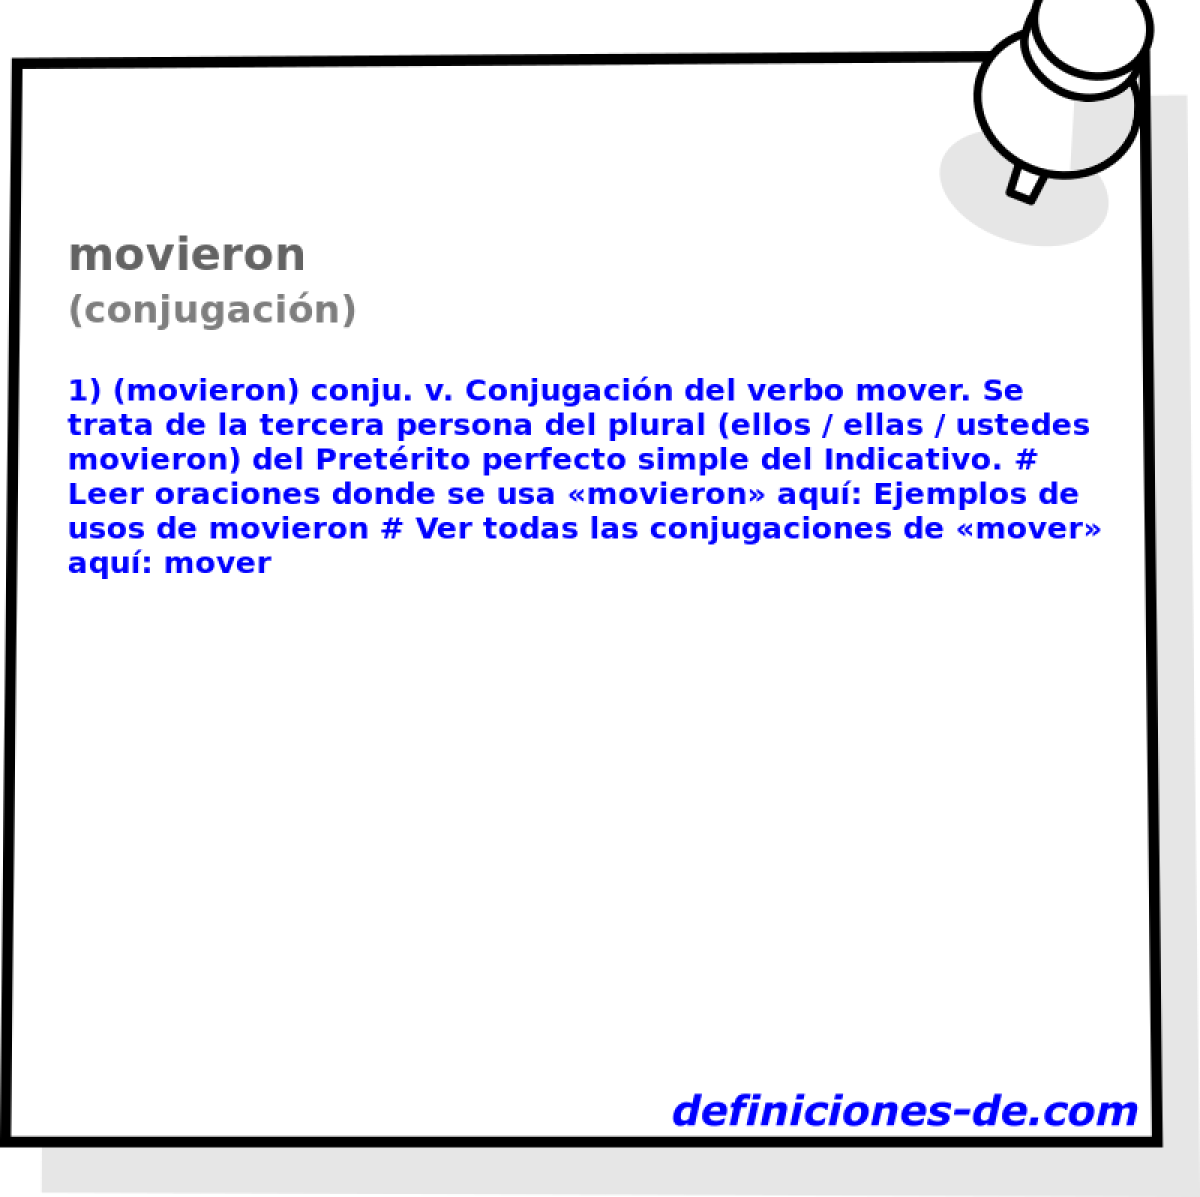 movieron (conjugacin)